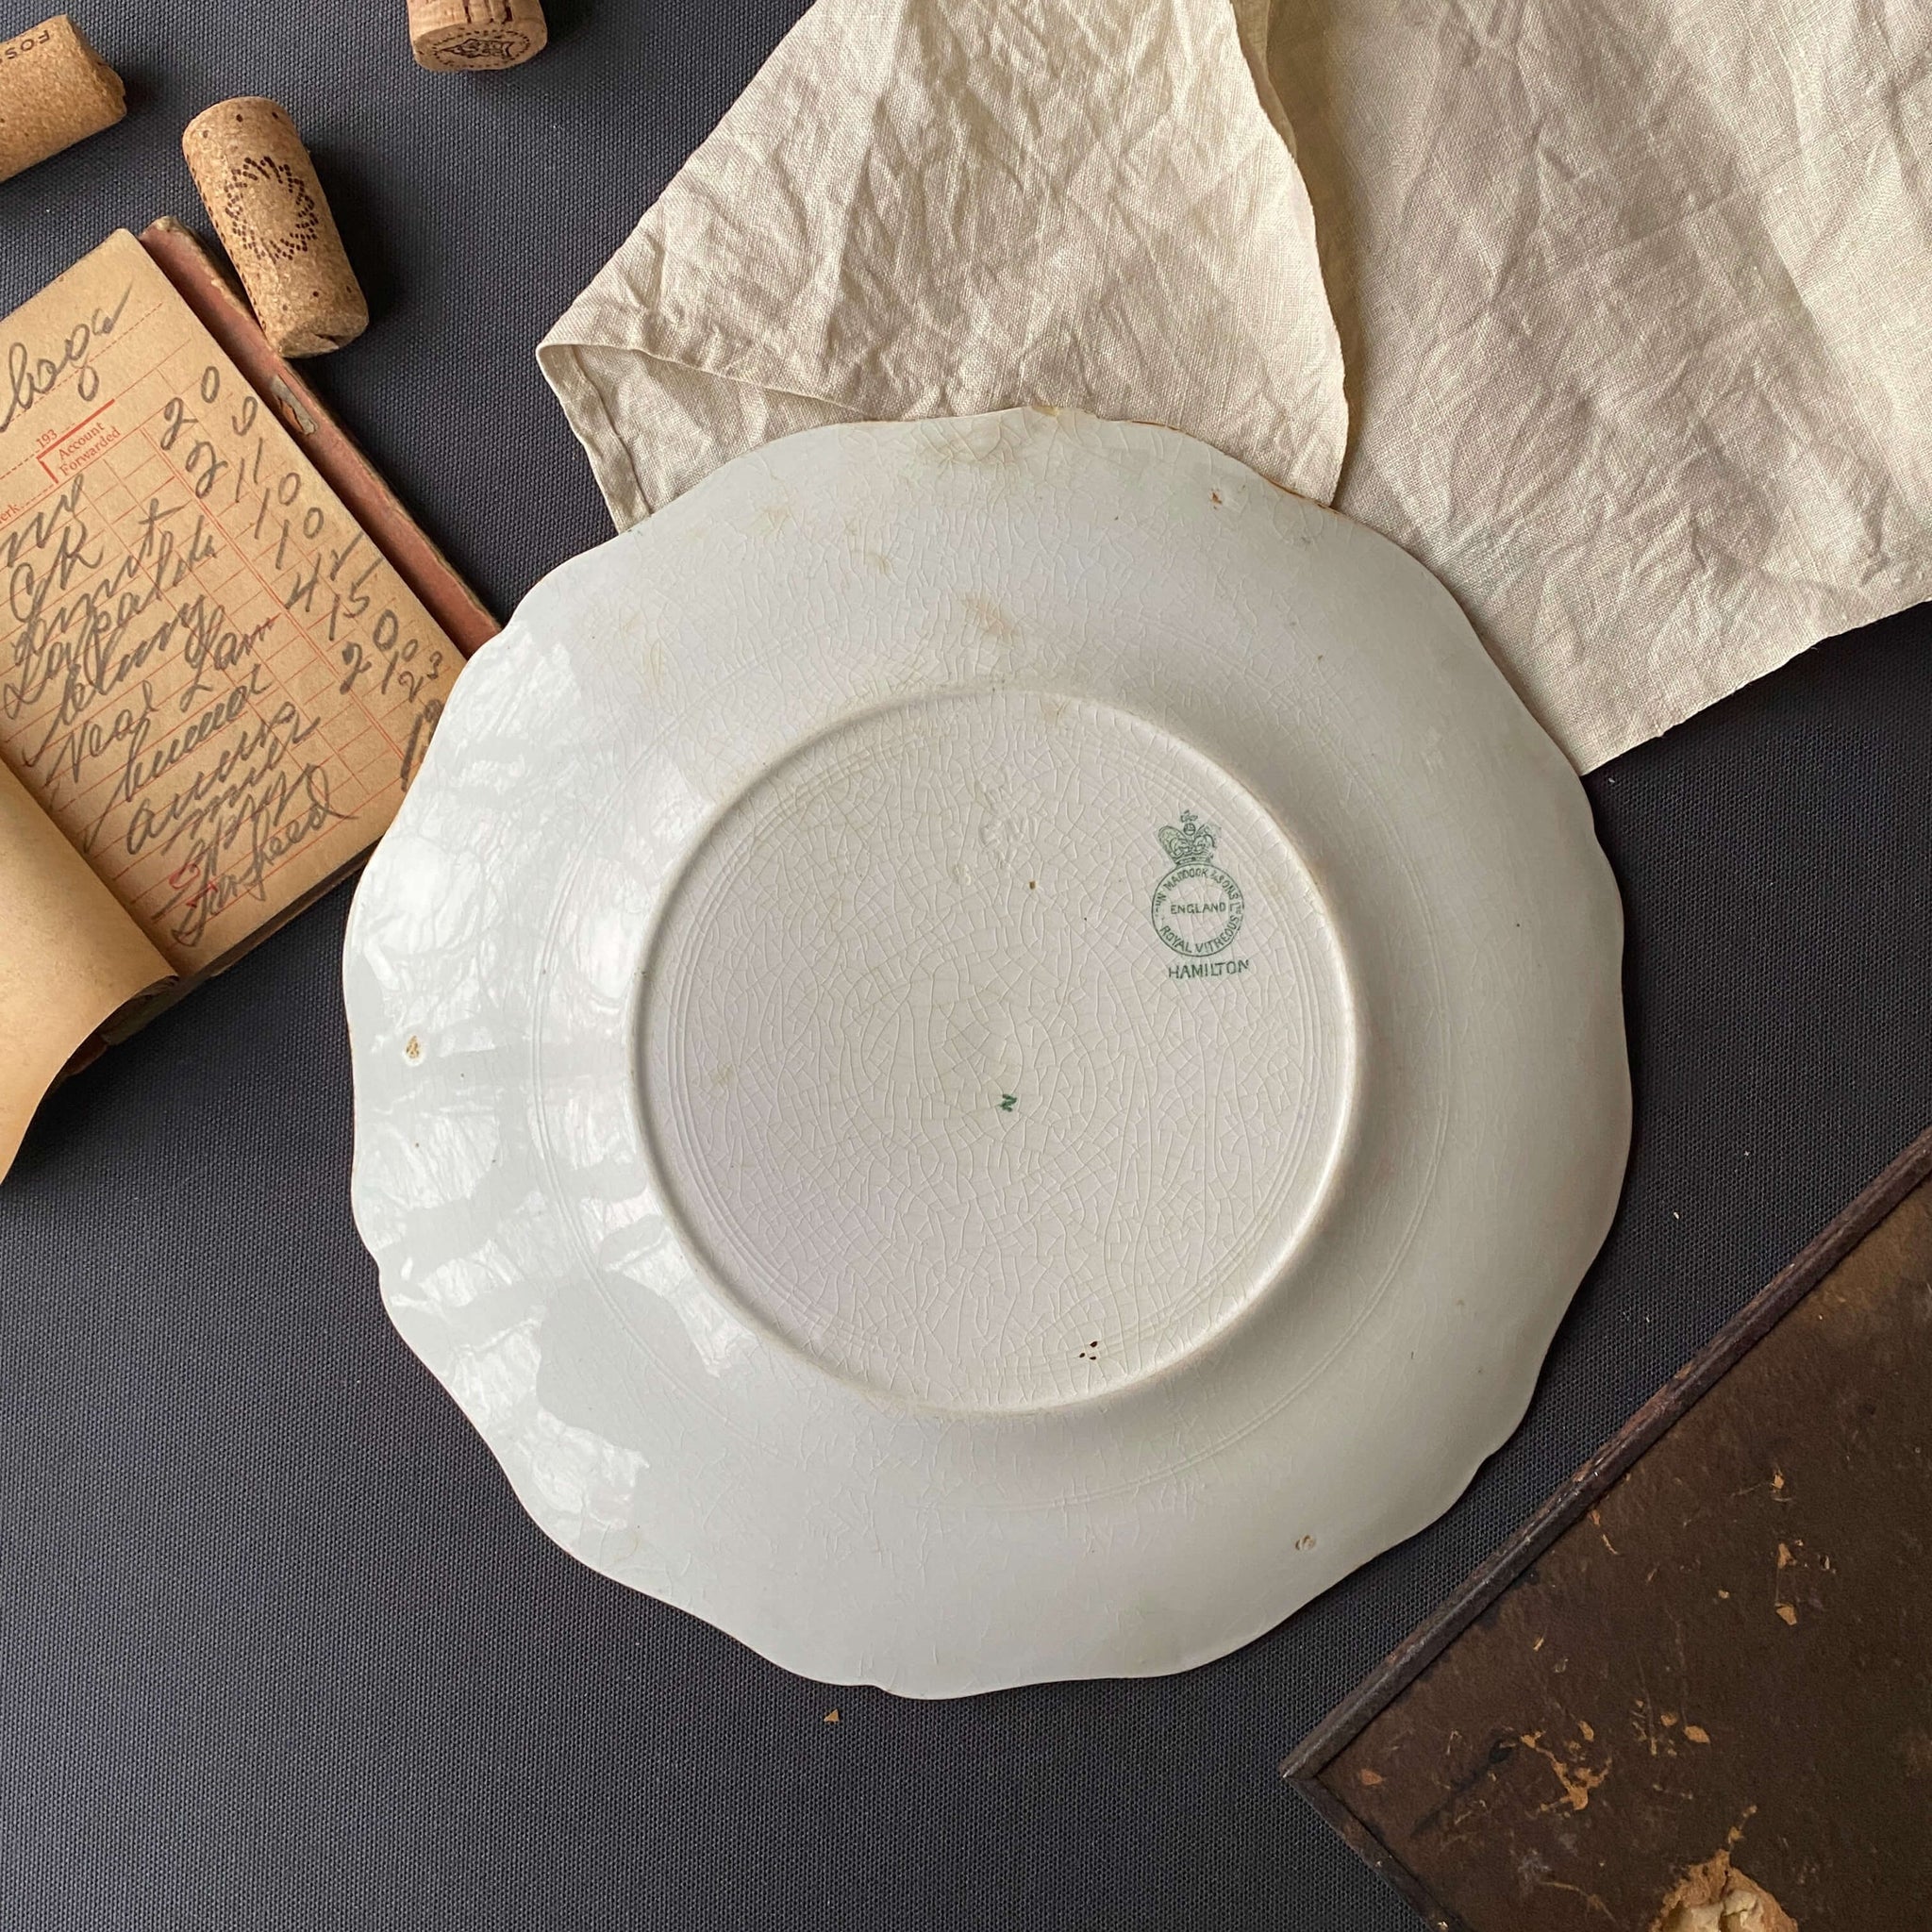 Rare Antique John Maddock & Sons Dinner Plate - Hamilton Pattern circa 1910-1936 King George V